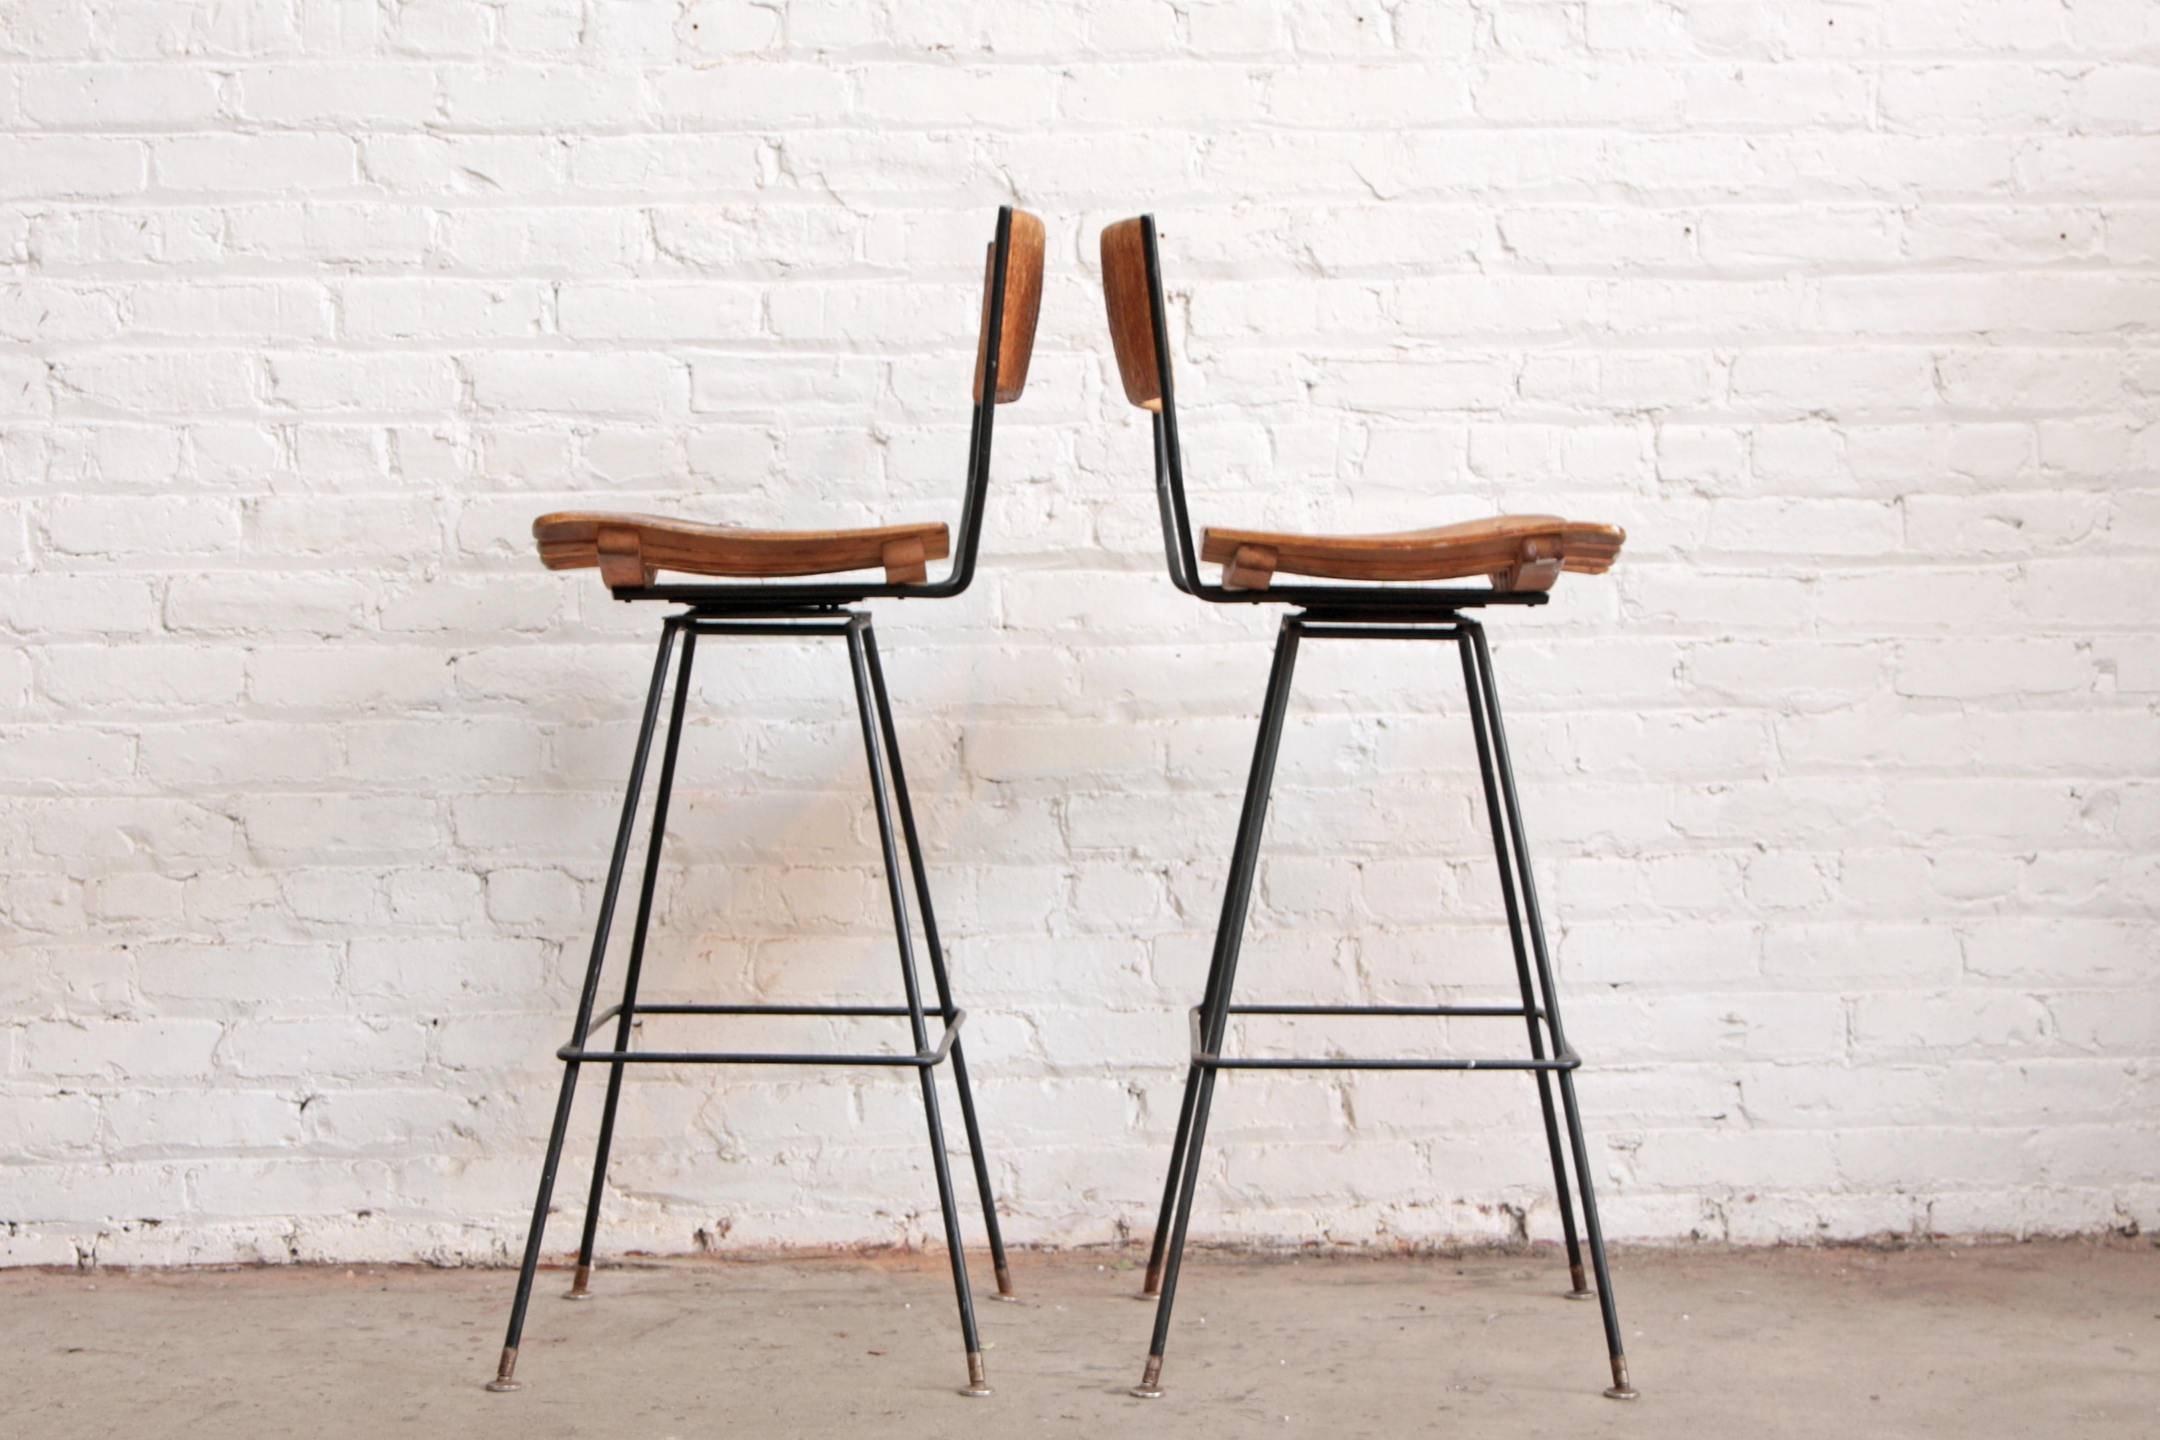 A pair of Arthur Umanoff swivel bar stools. Wrought iron minimalist frames, wood slat seats and papercord backs. 

Measures: Seat height 30